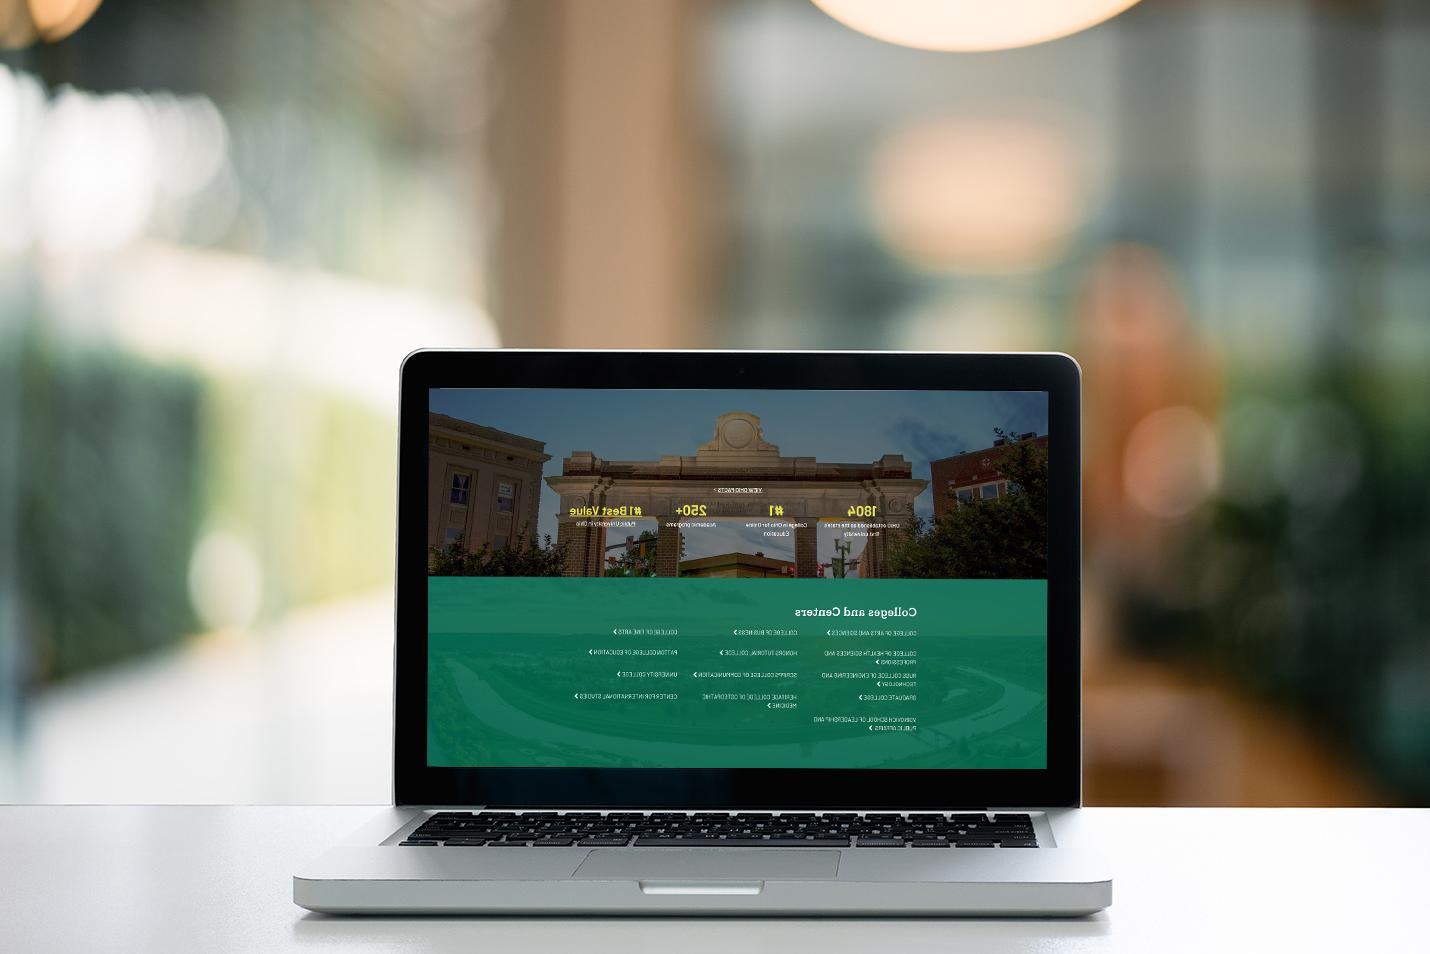 Ohio University web page open on a laptop